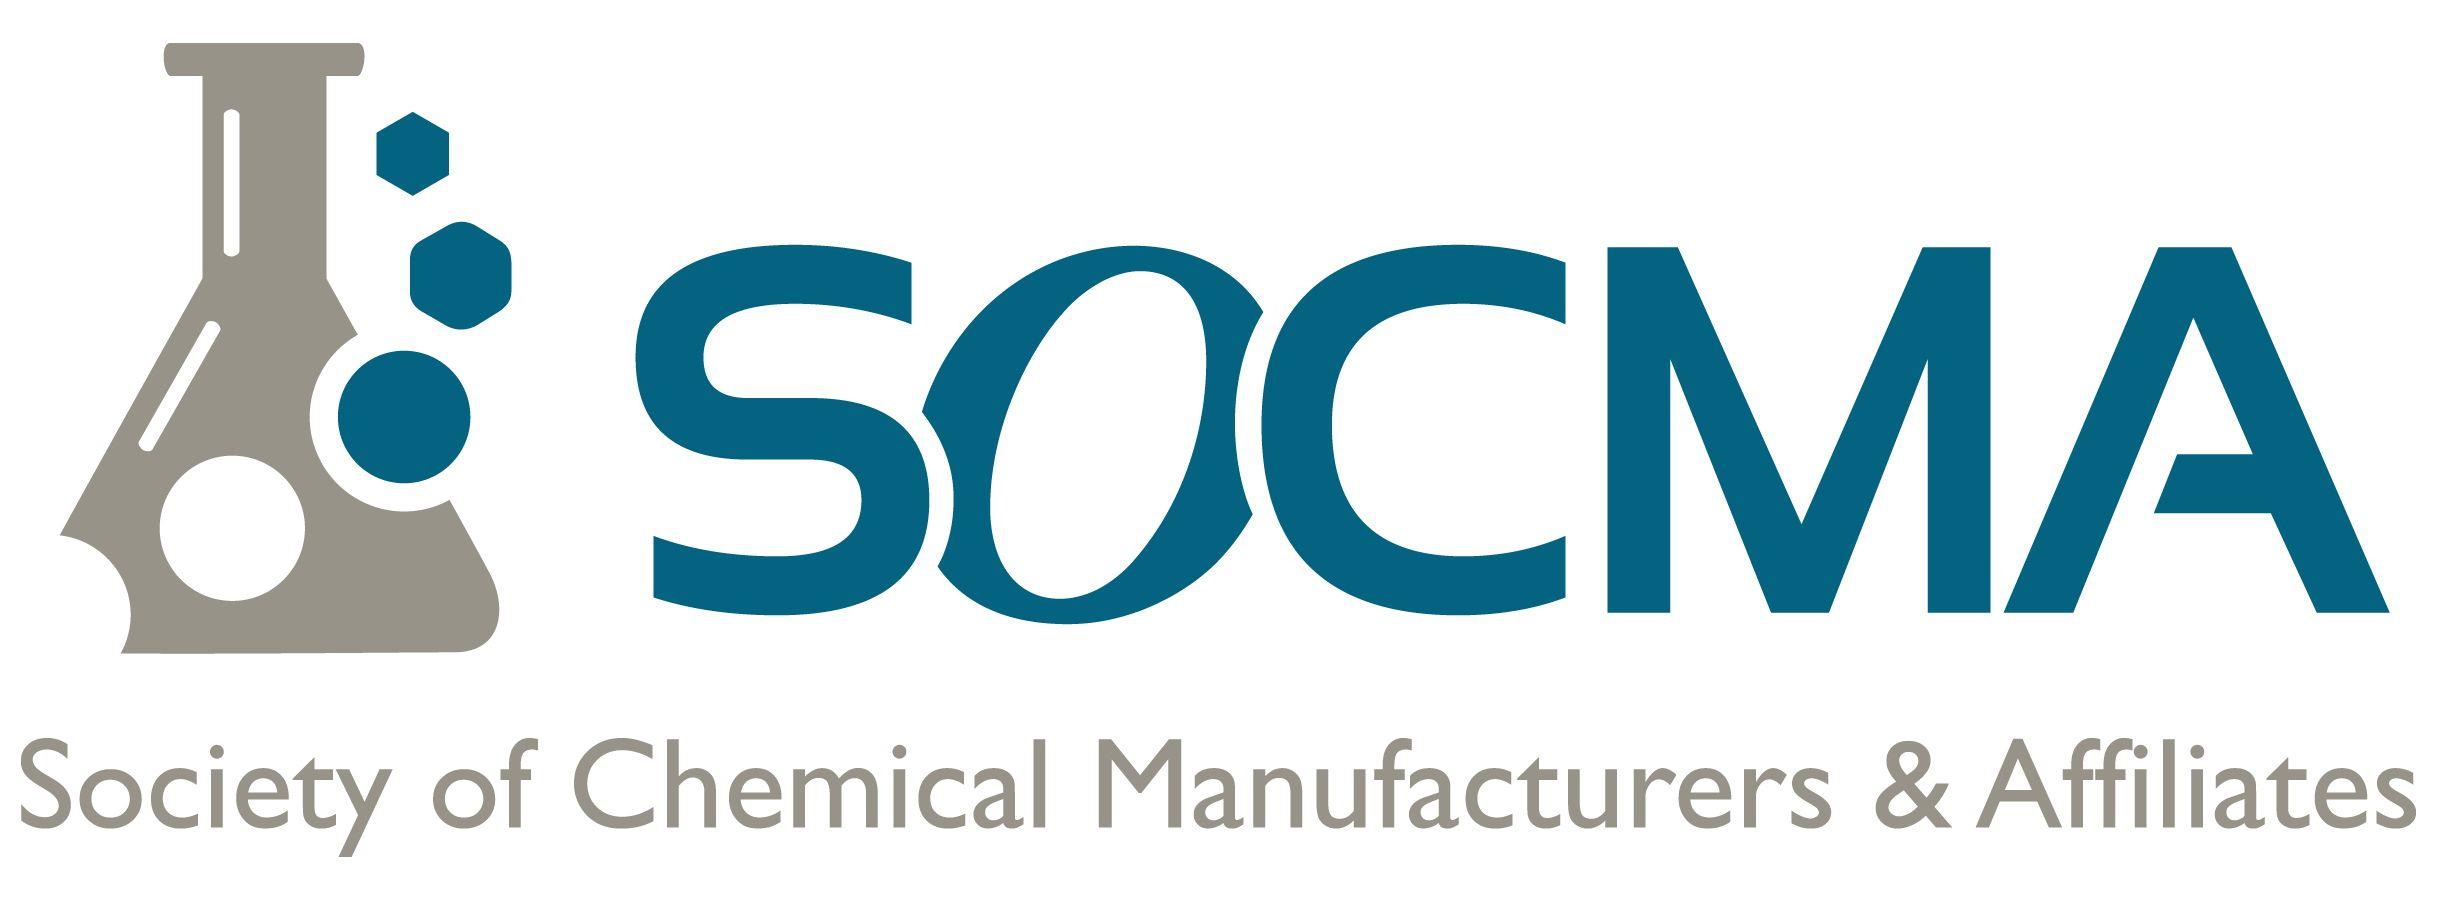 Chemical Company Logo - Chemicals Knowledge Hub -